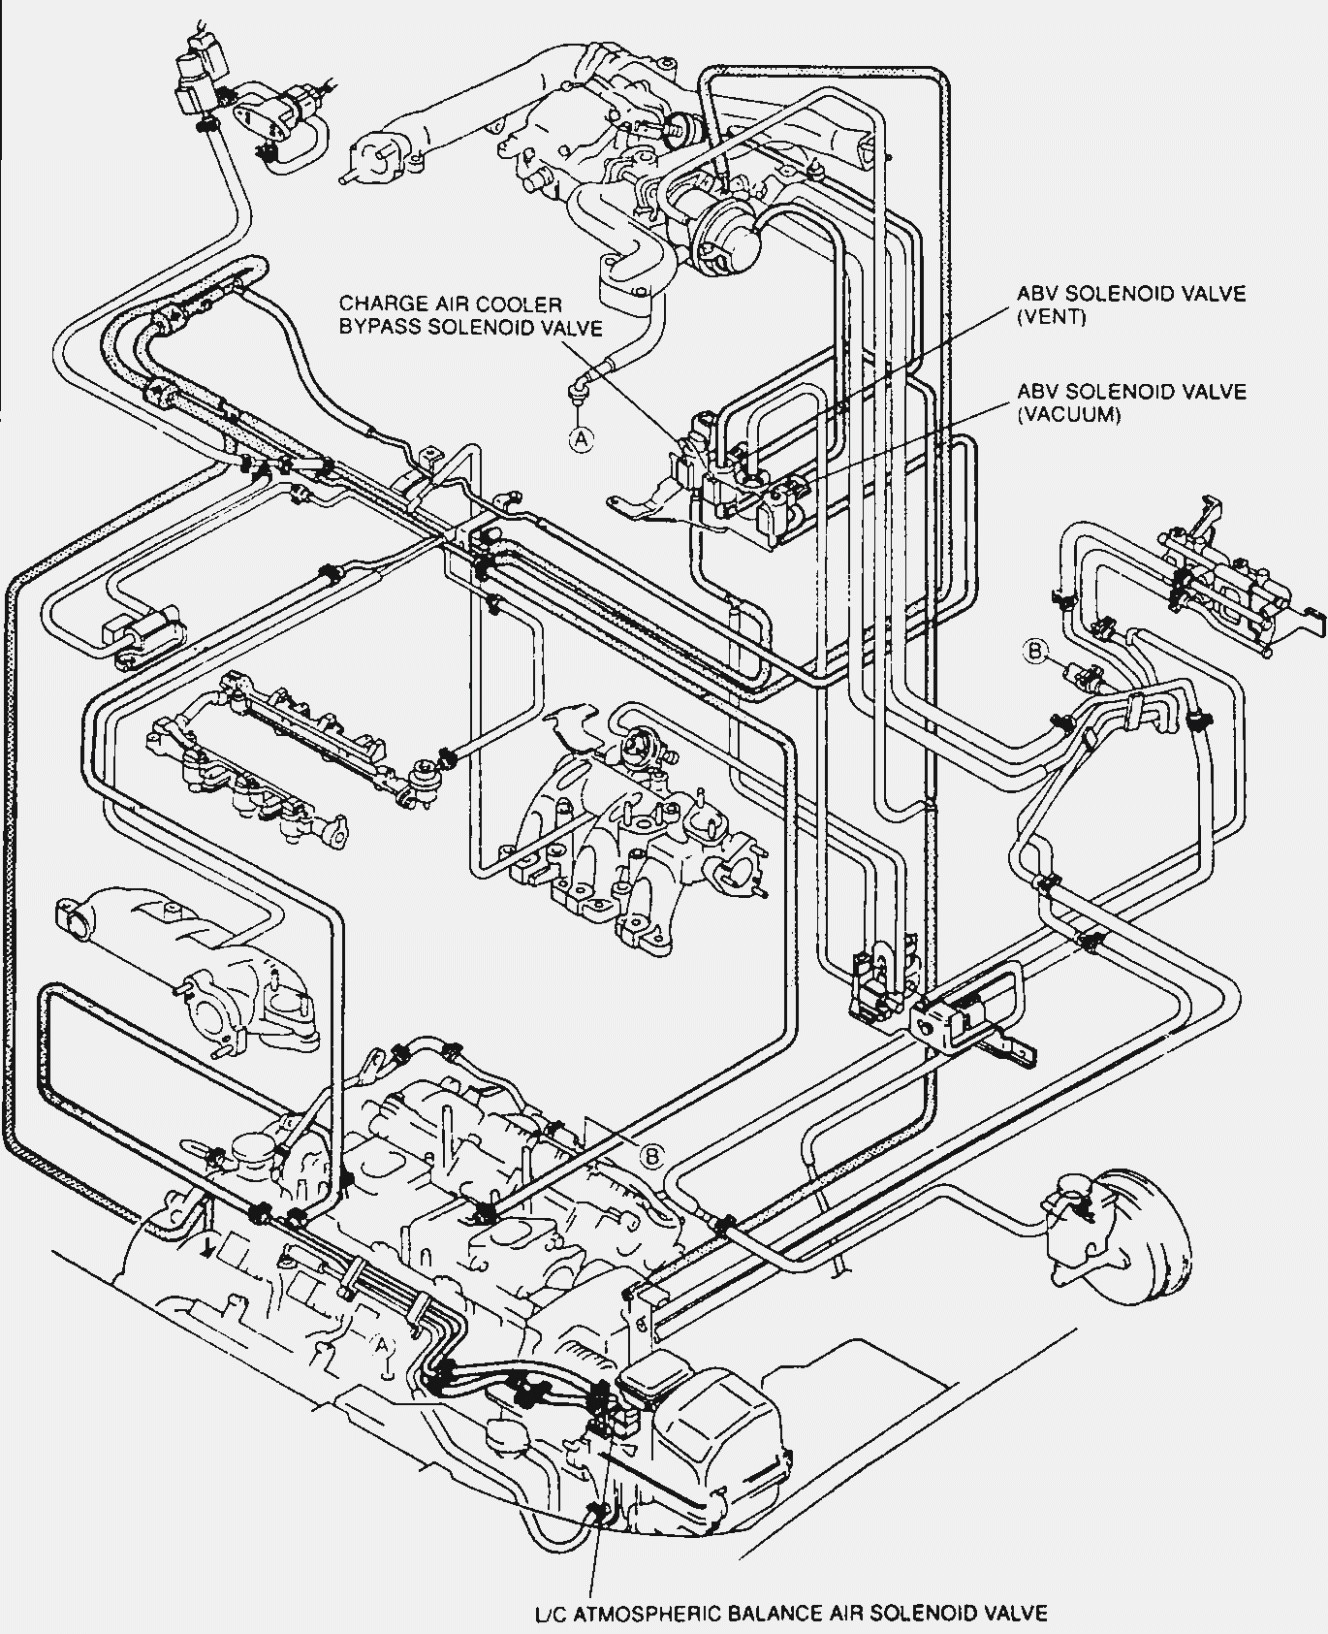 2002 Mazda Millenia Engine Diagram Wiring Diagrams Mazda Millenia Abv Wiring Diagrams Konsult Of 2002 Mazda Millenia Engine Diagram